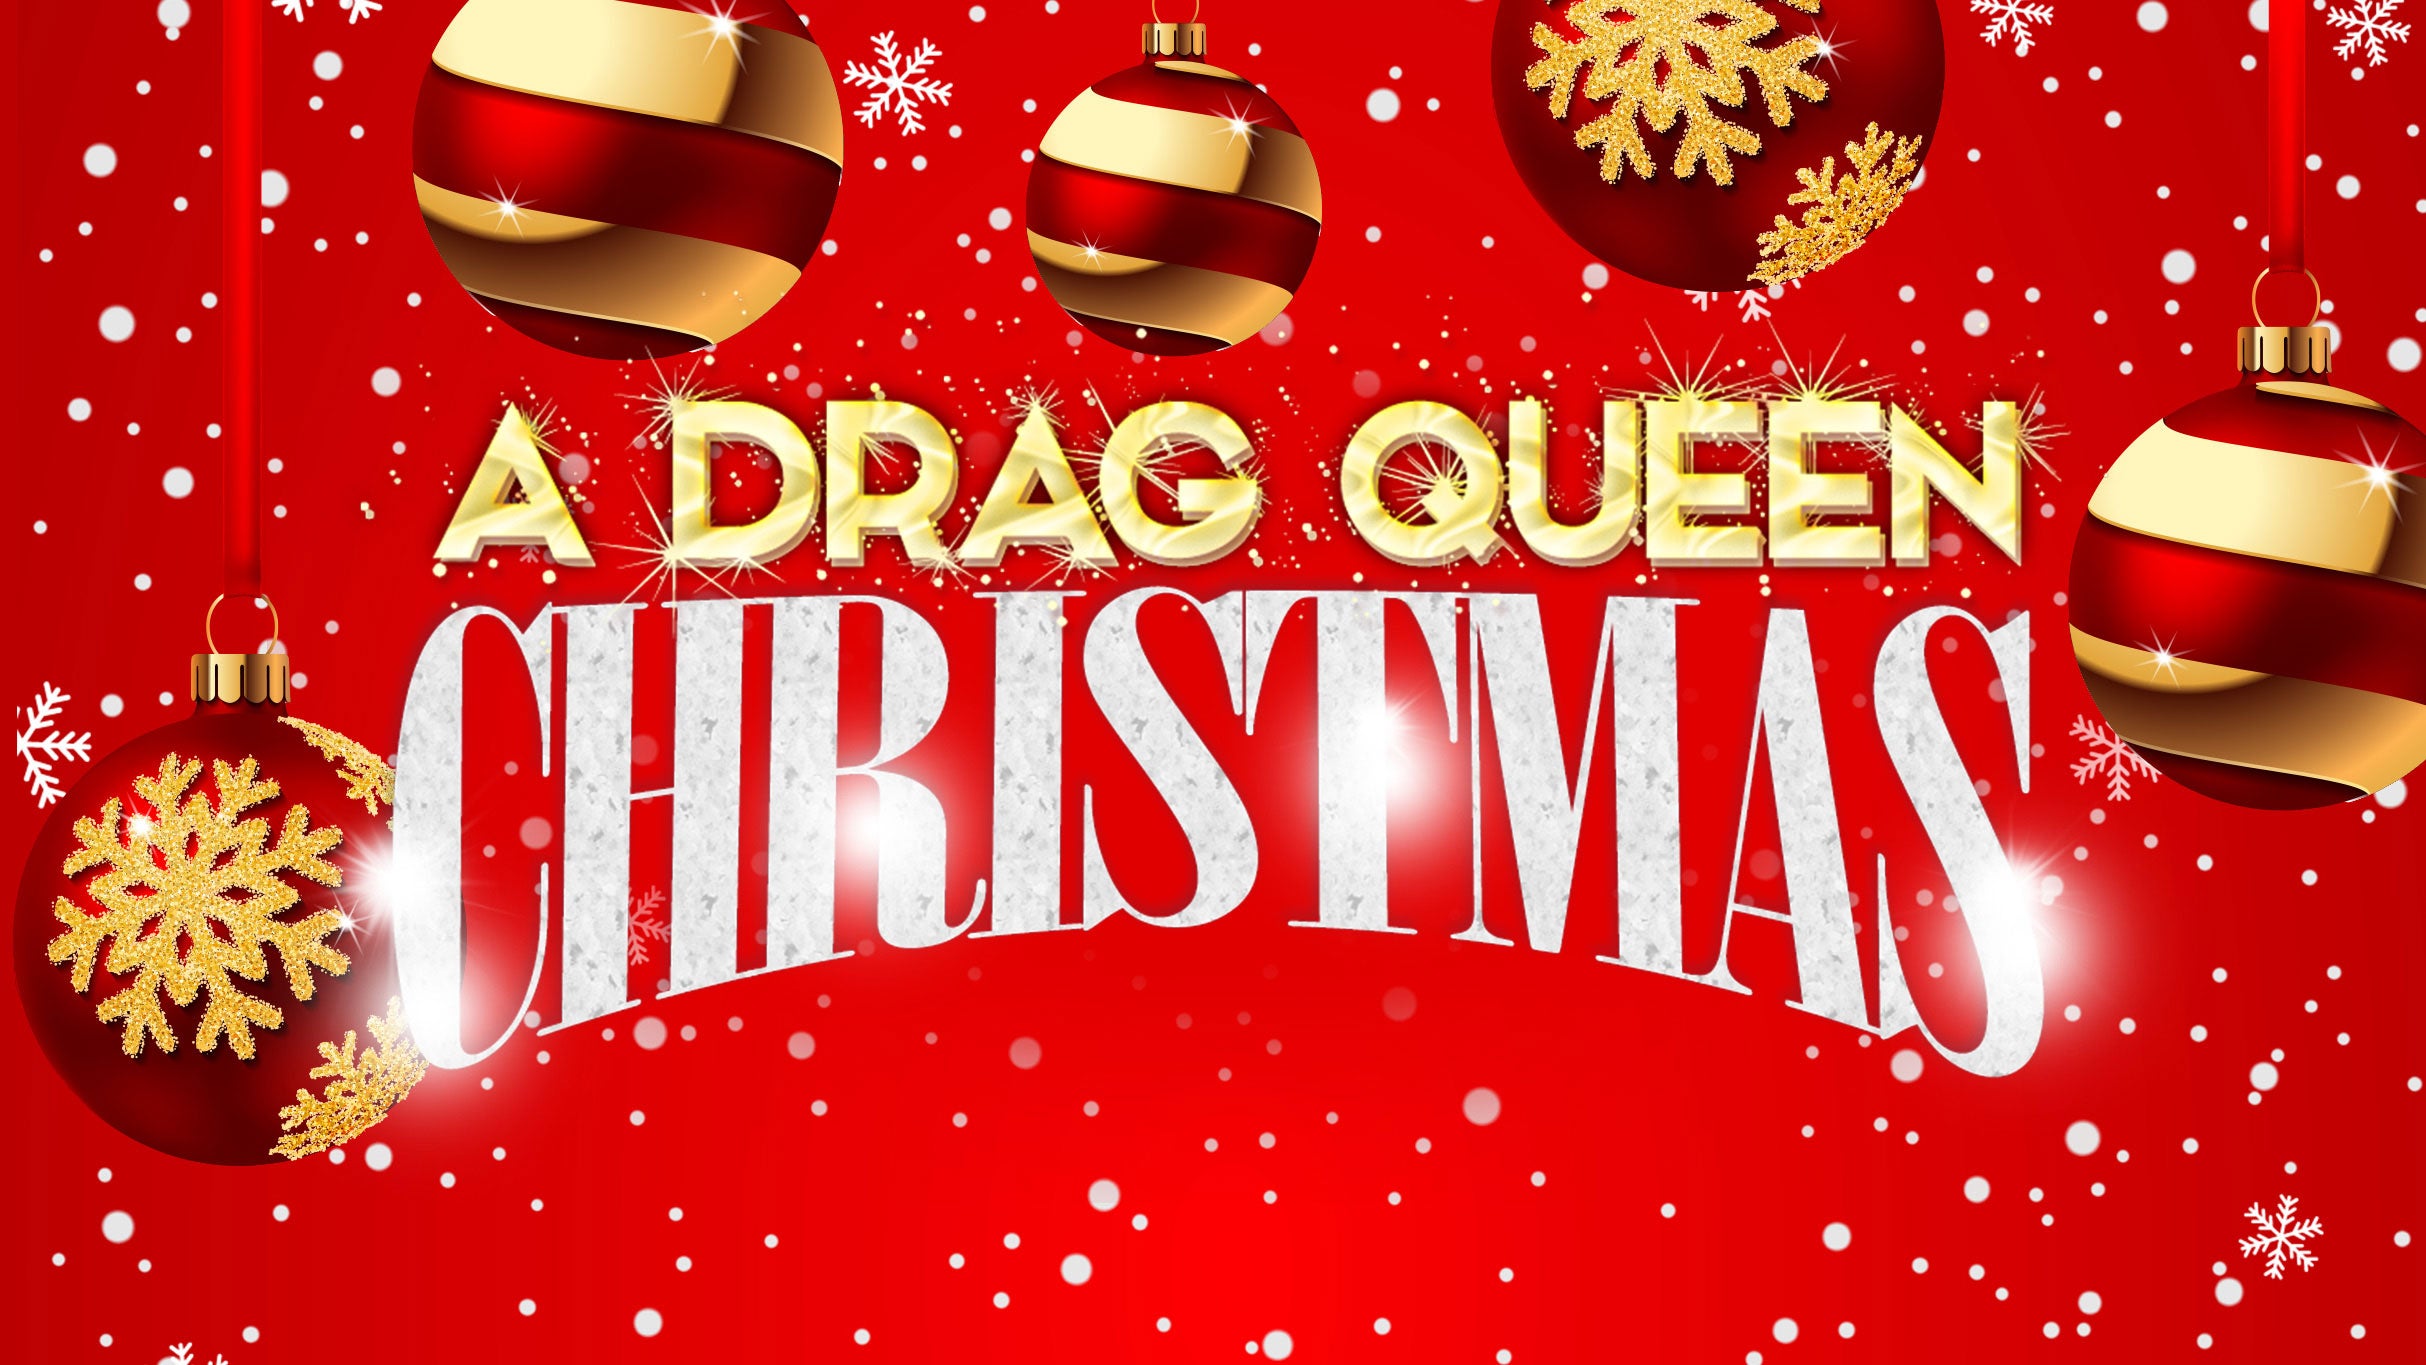 A Drag Queen Christmas free presale passcode